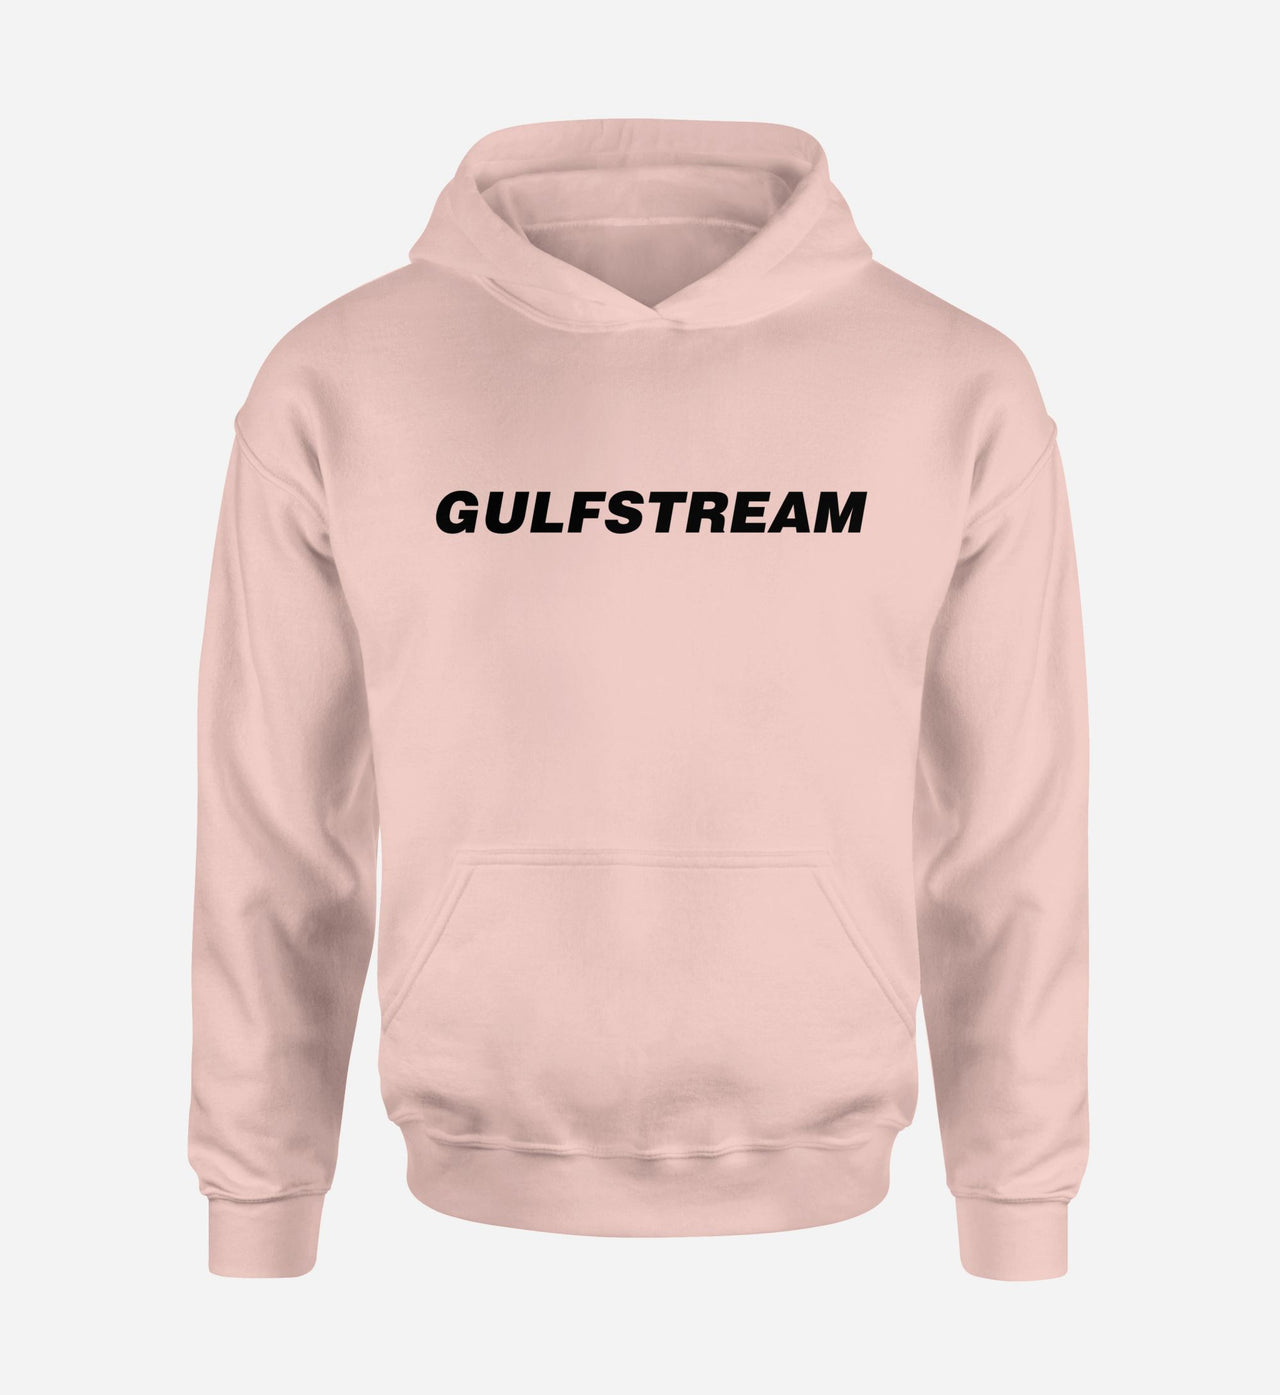 Gulfstream & Text Designed Hoodies